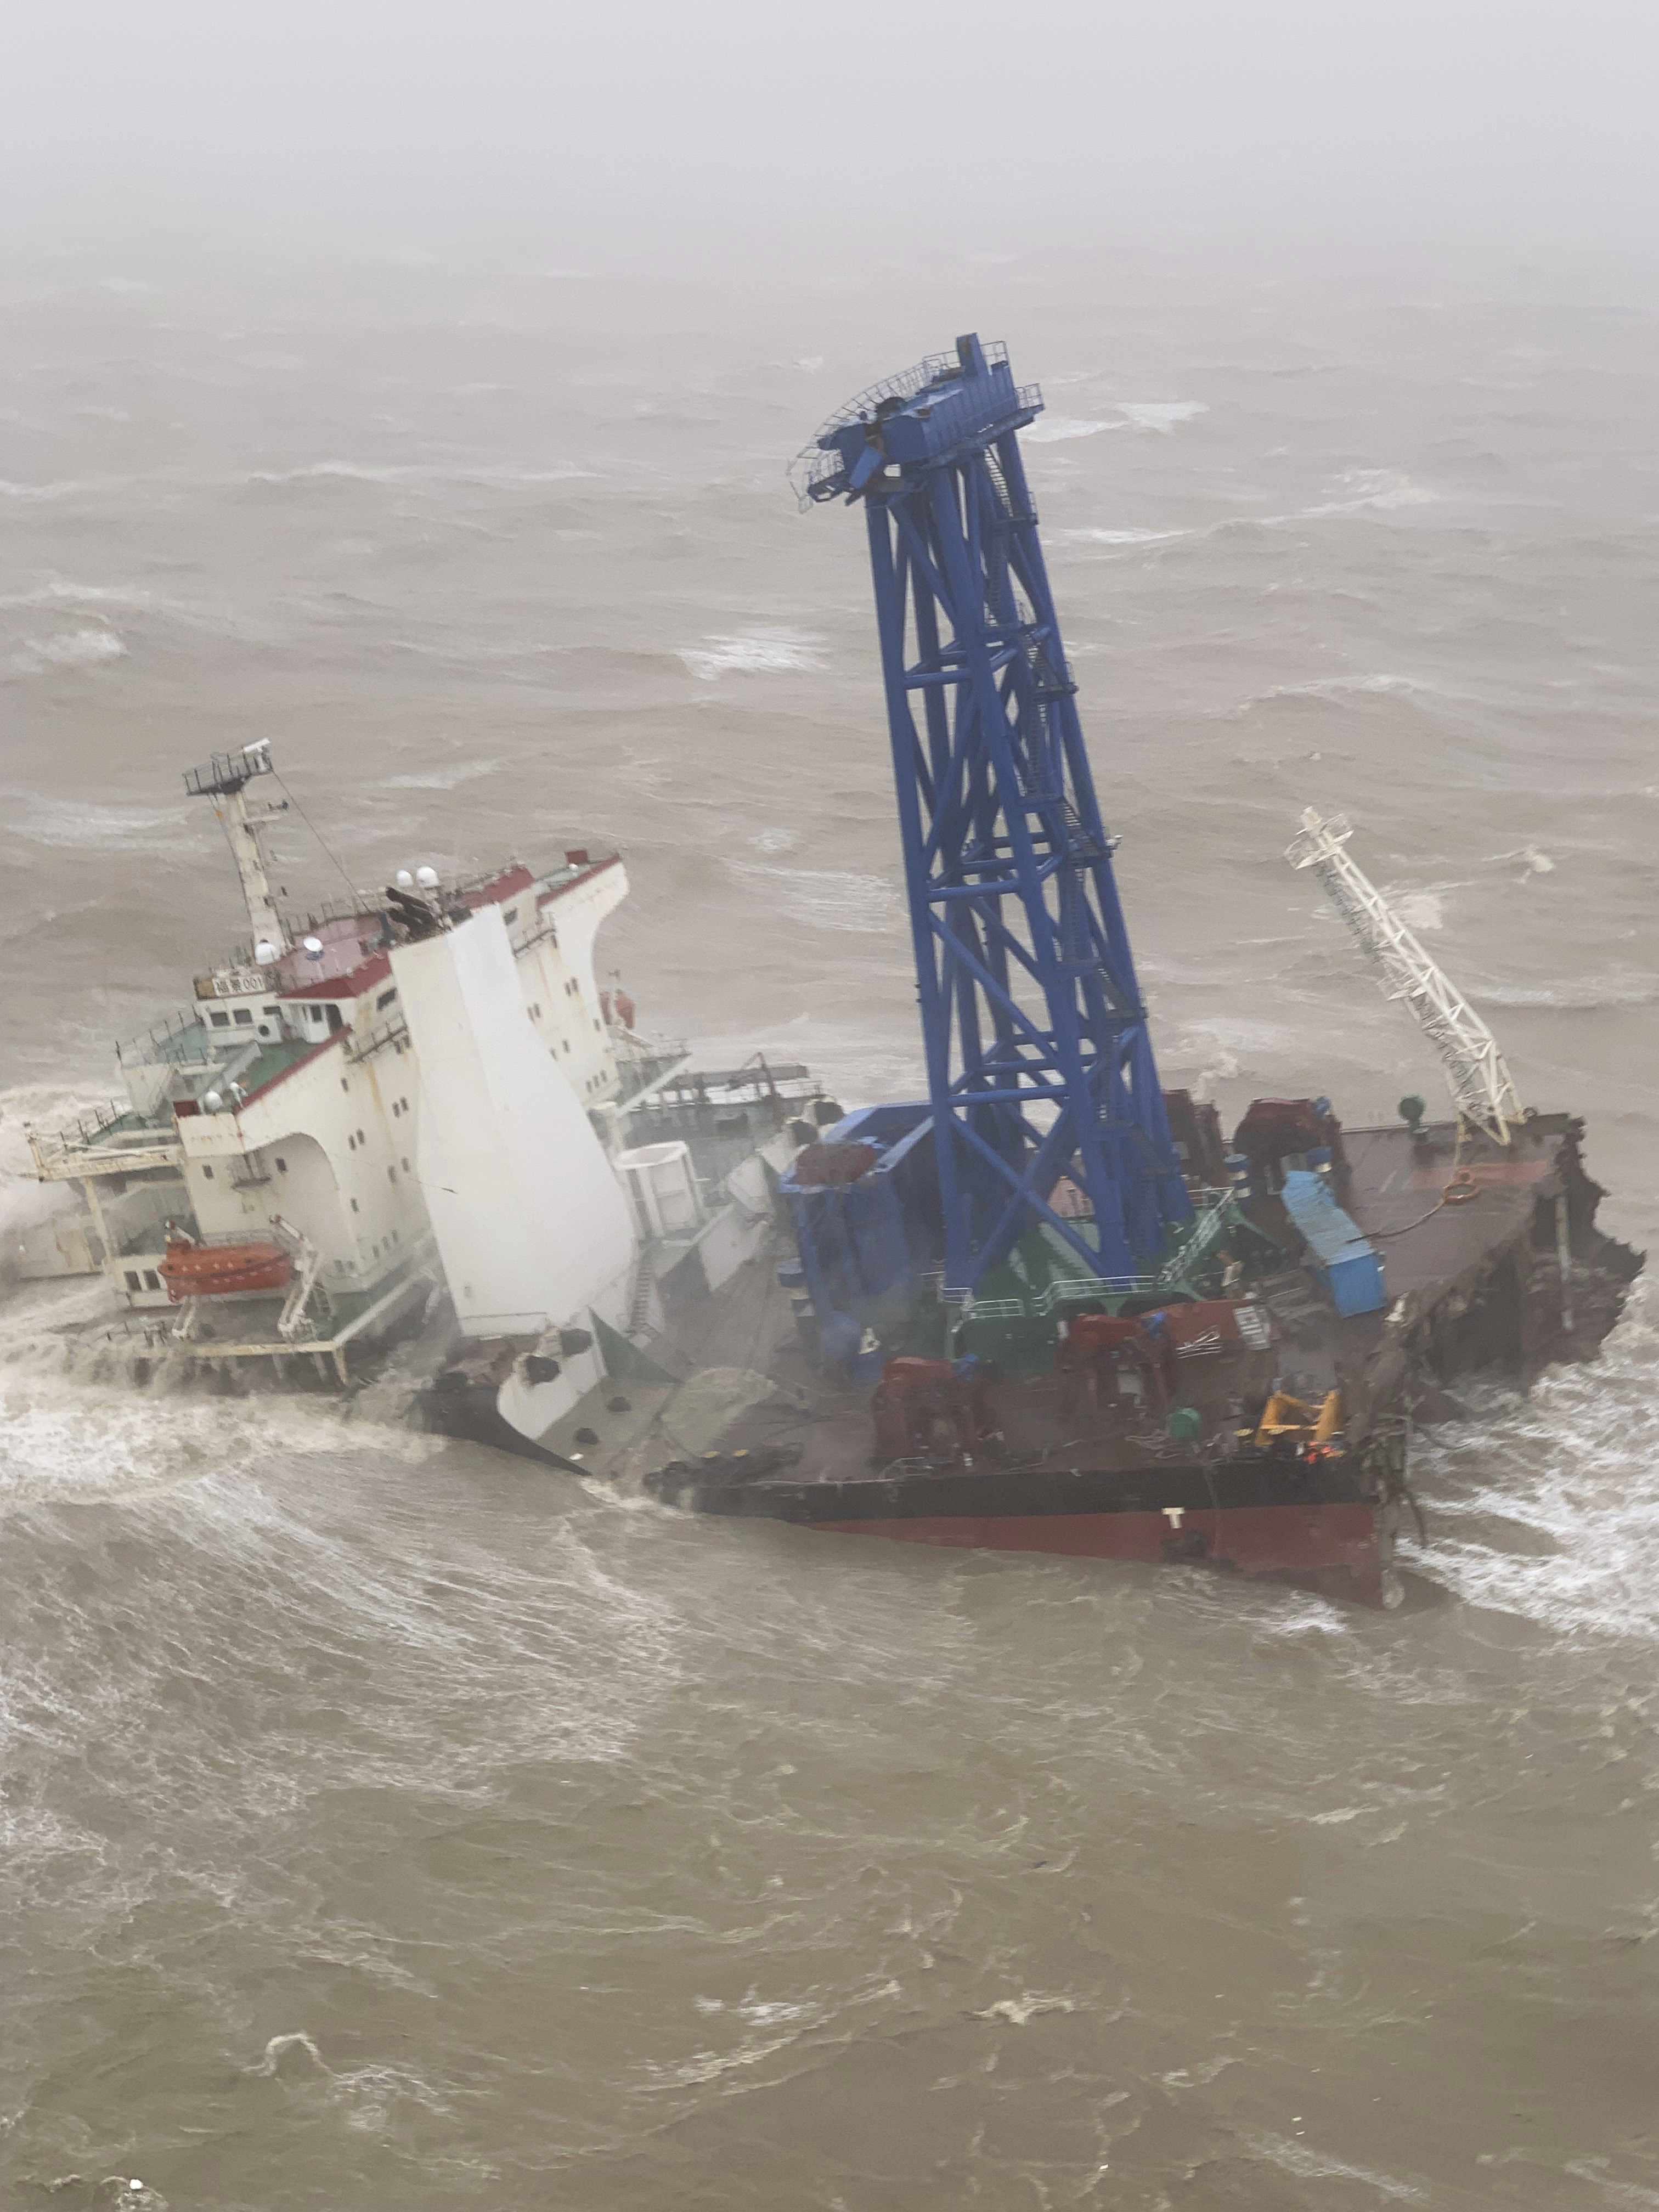 A cargo ship broken in half in the South China Sea